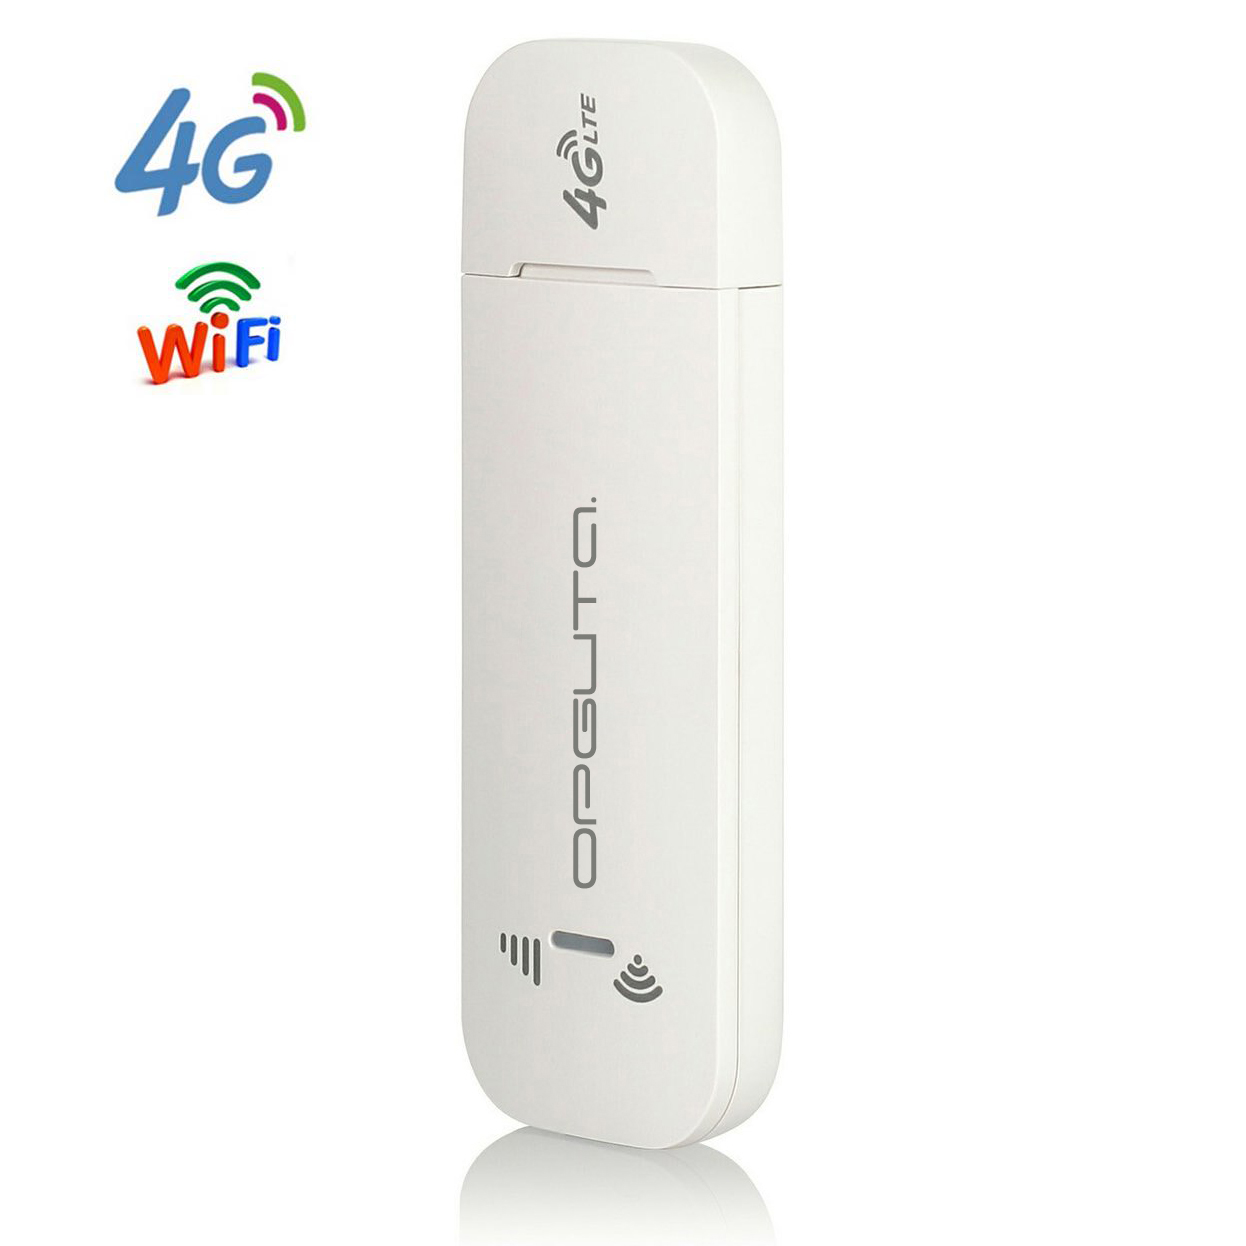 3G/4G модем Орбита OT-PCK29 4G USB модем (Wi-Fi)